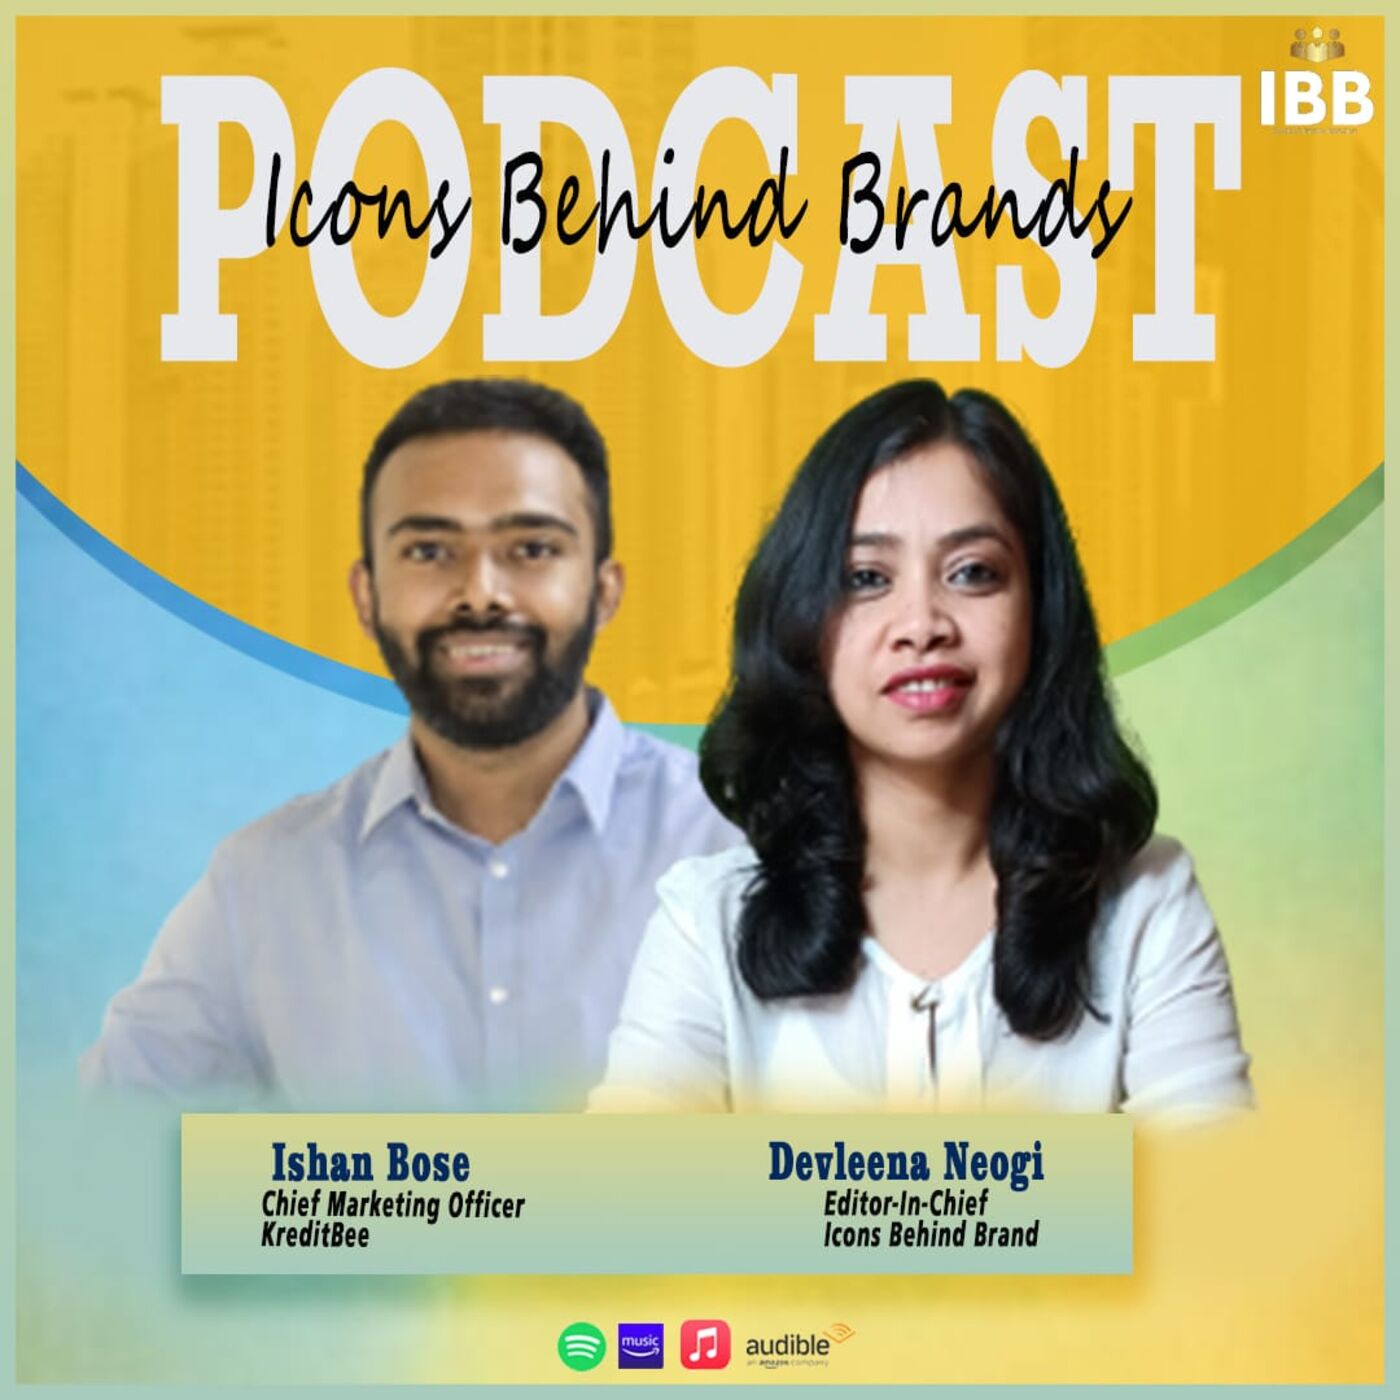 Top Brand Strategies From Expert| Mr. Ishan Bose| IBB